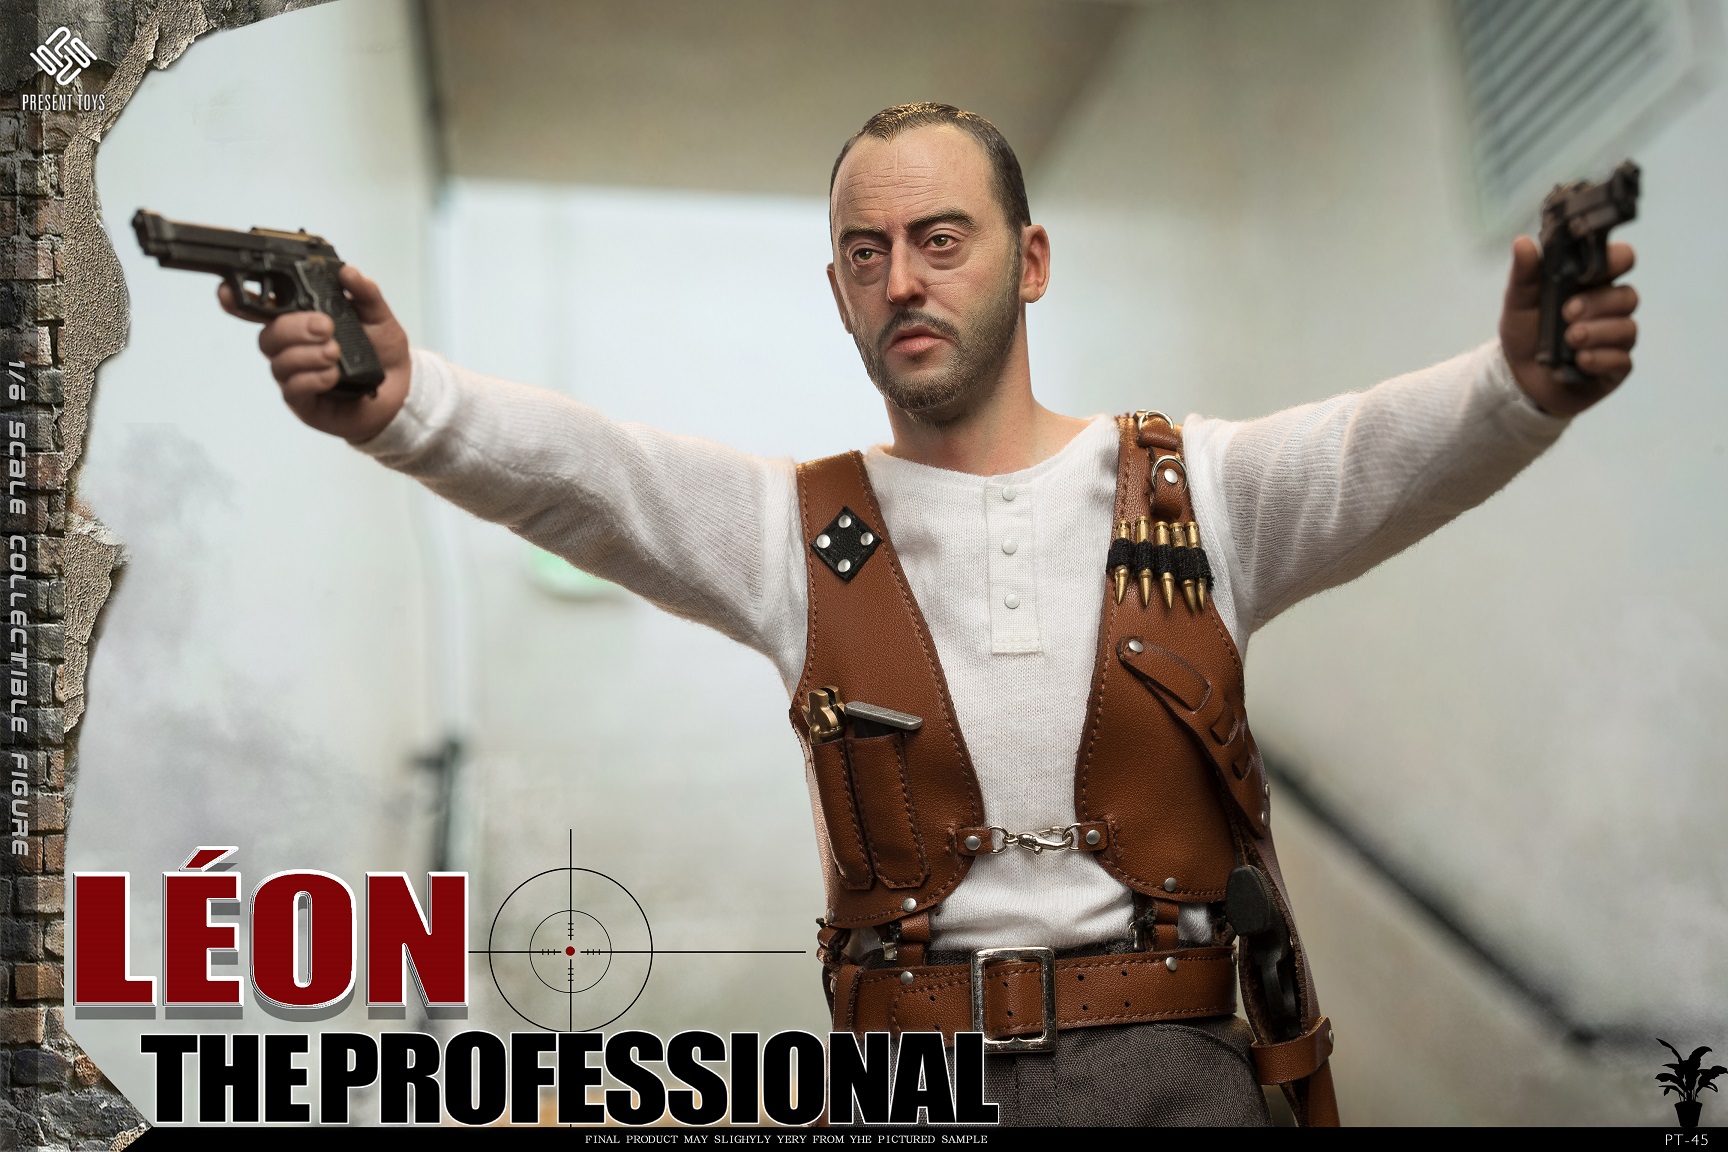 Leon - The Professional